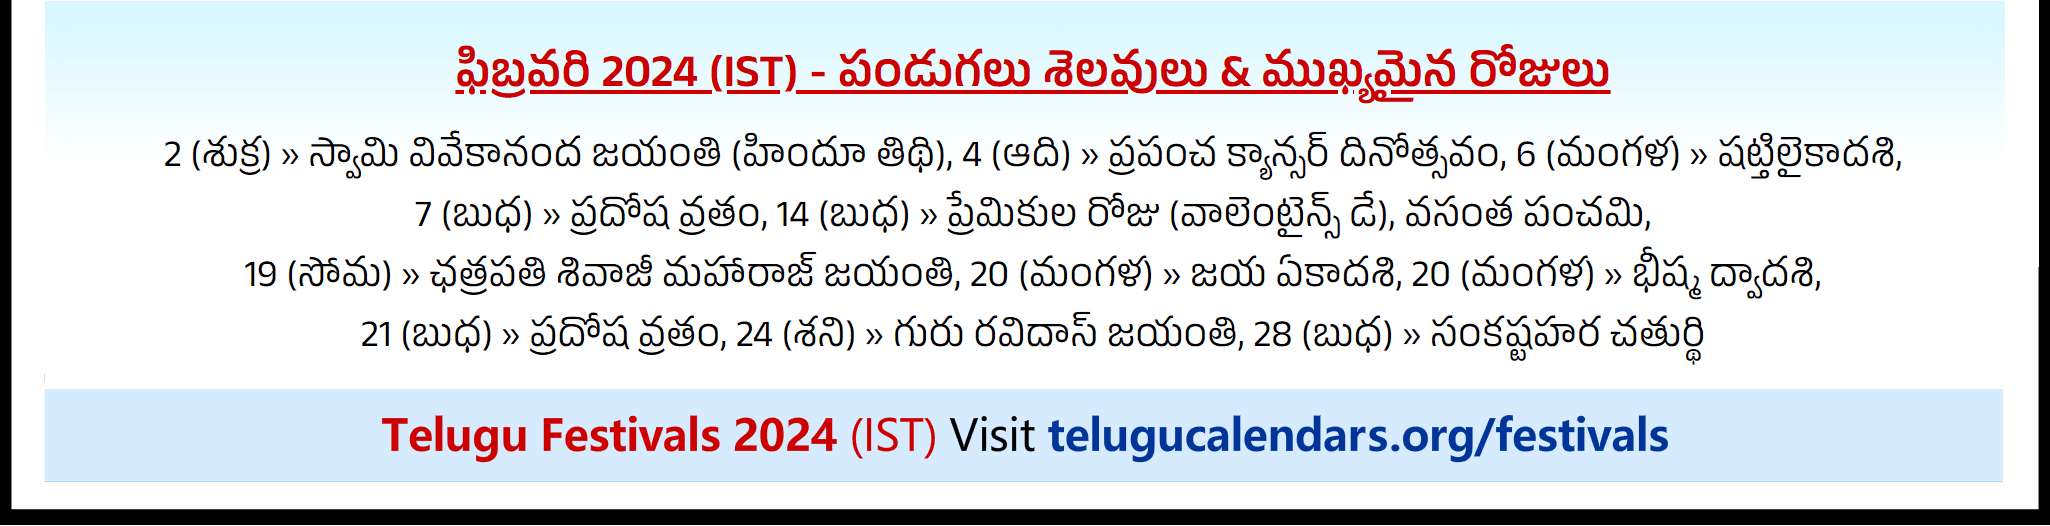 Telugu Festivals 2024 February Perth